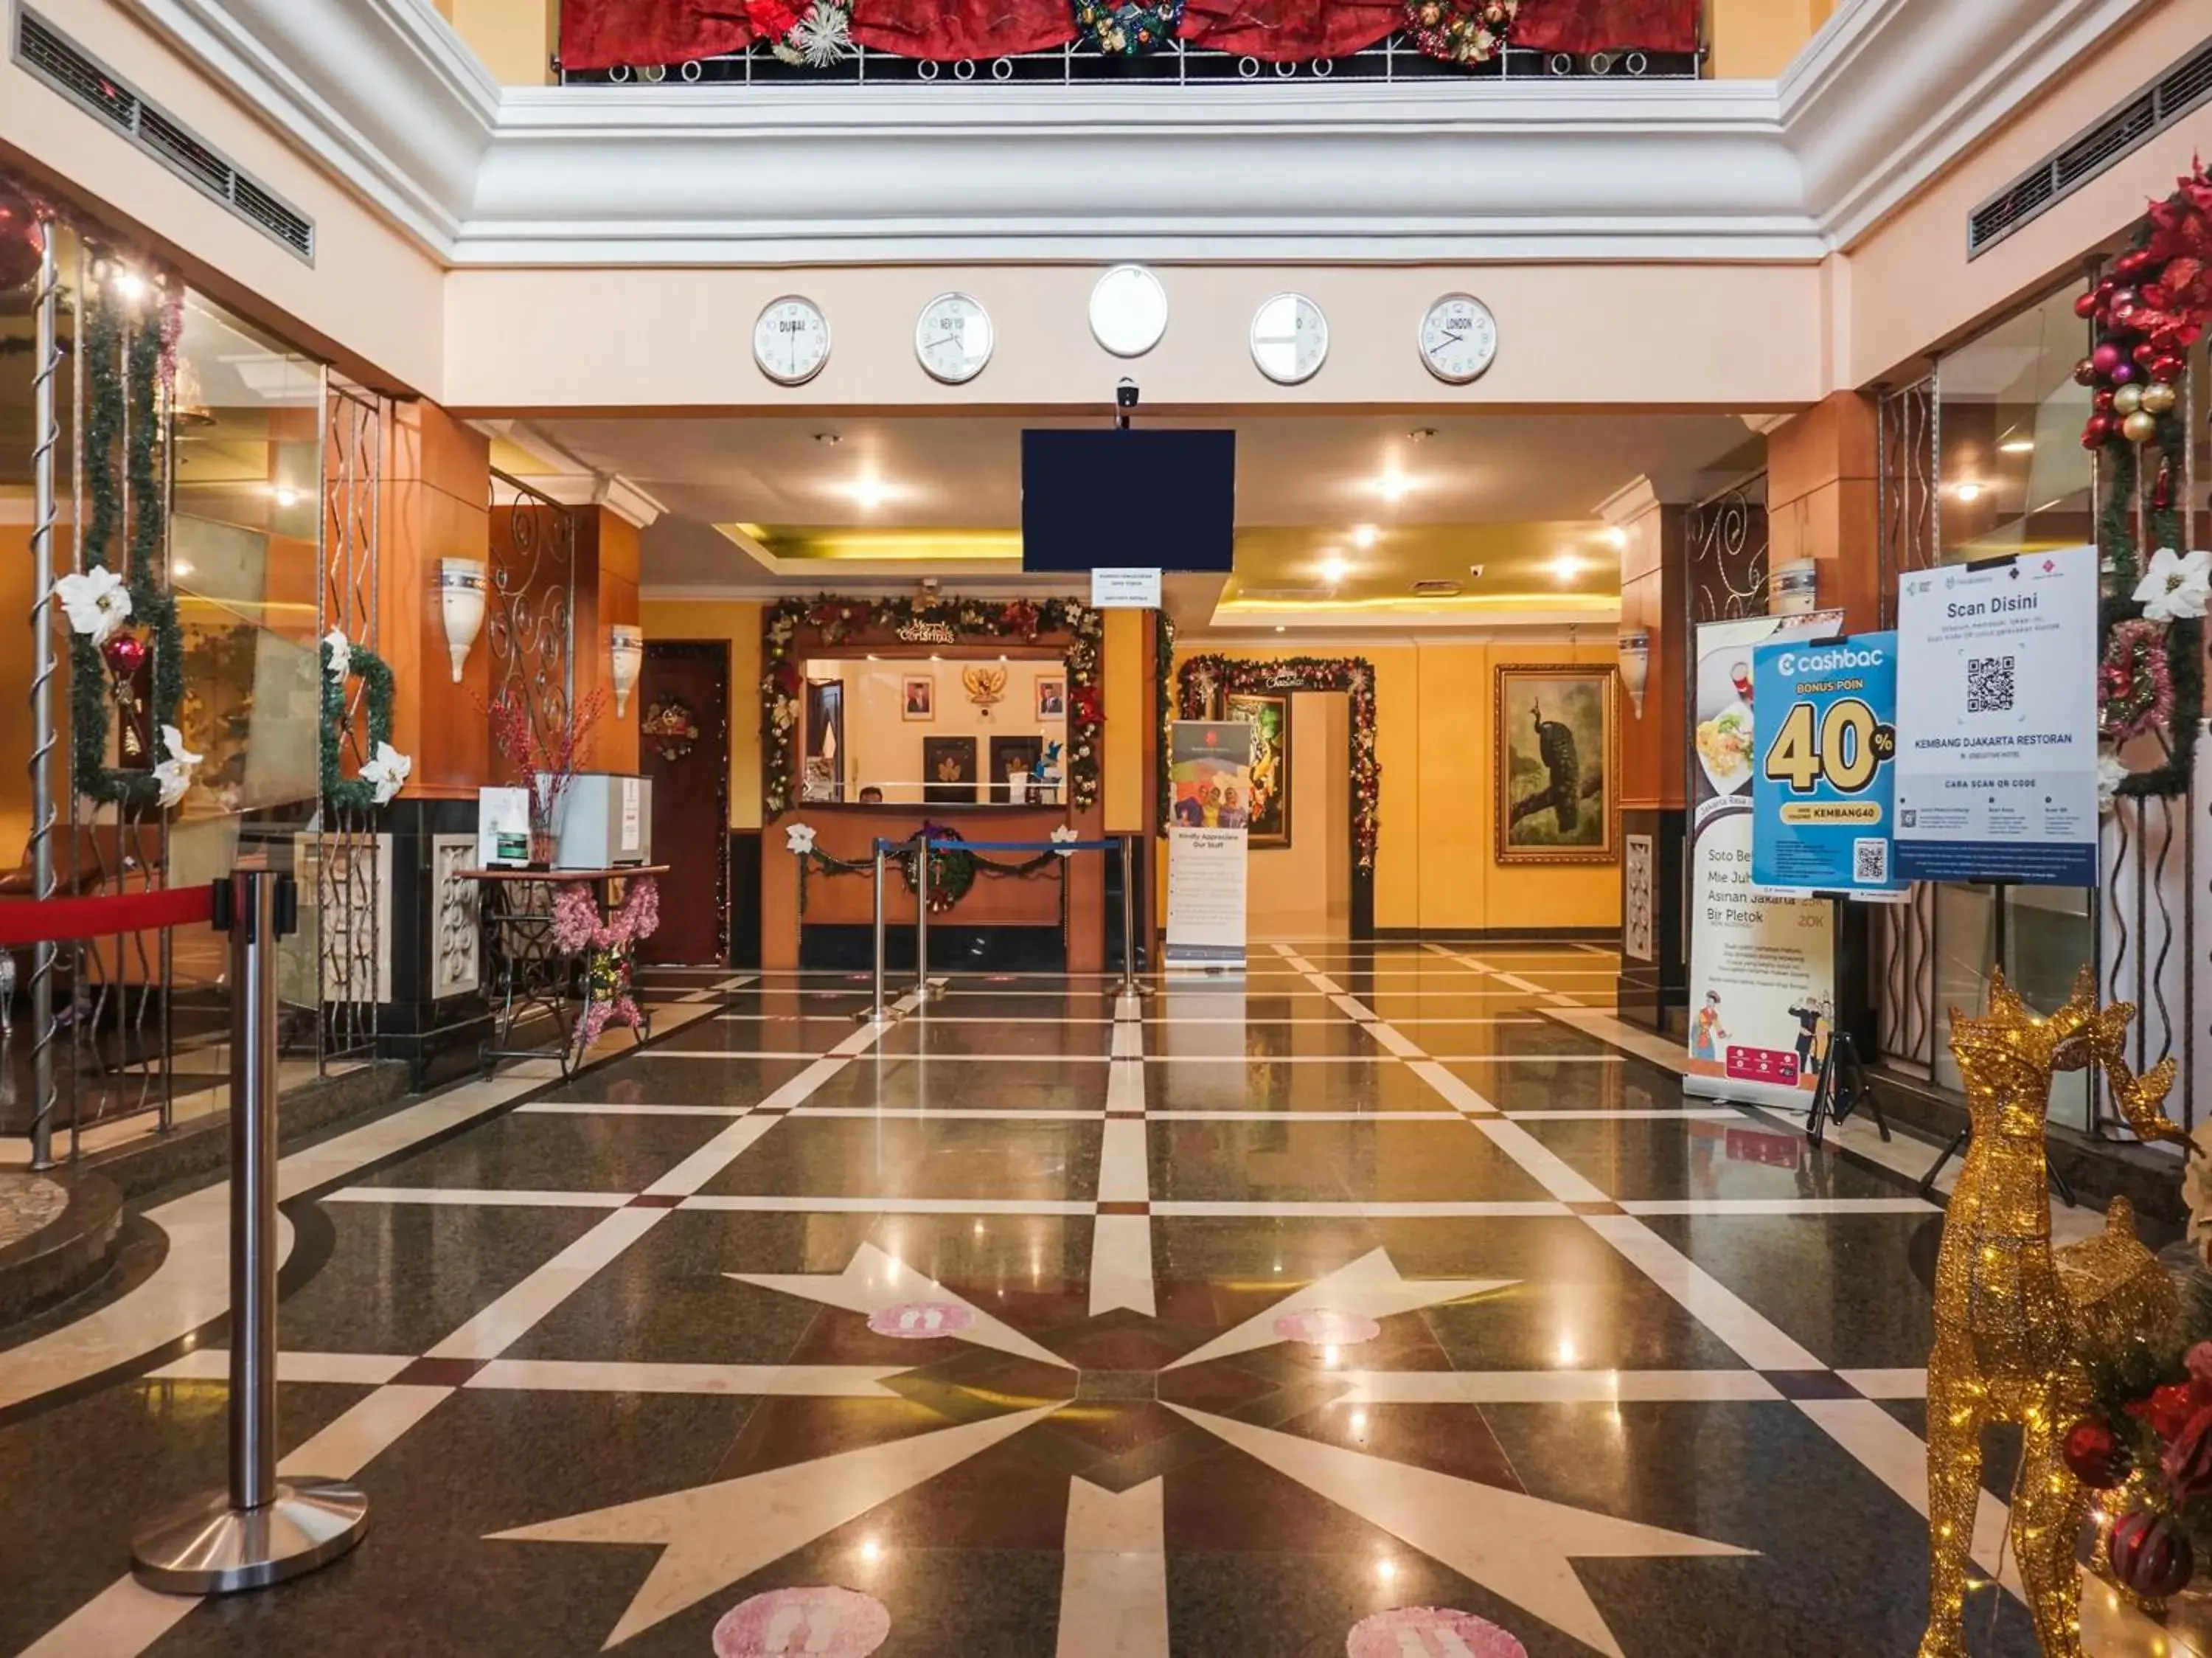 Lobby or reception in BI Executive Hotel